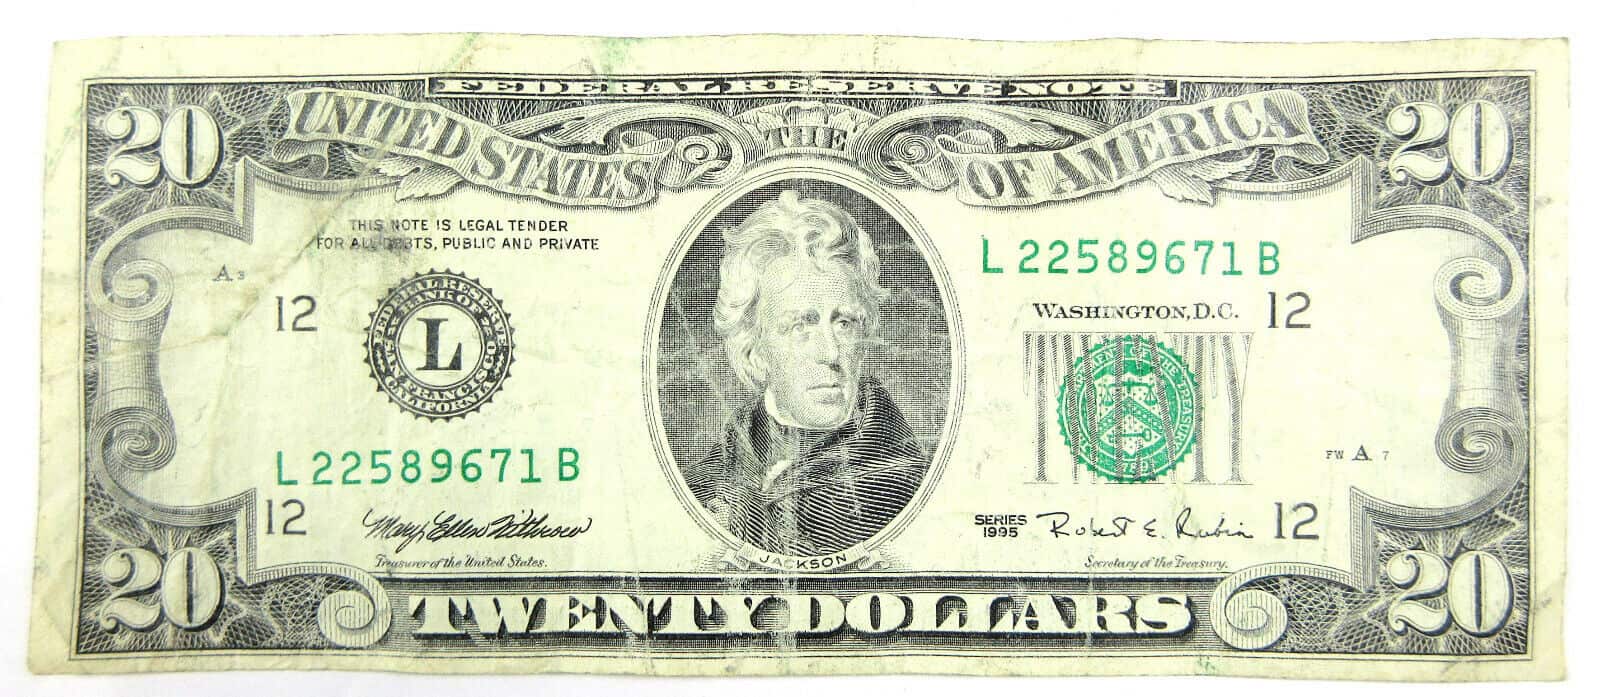 History of the 1995 20 Dollar Bill